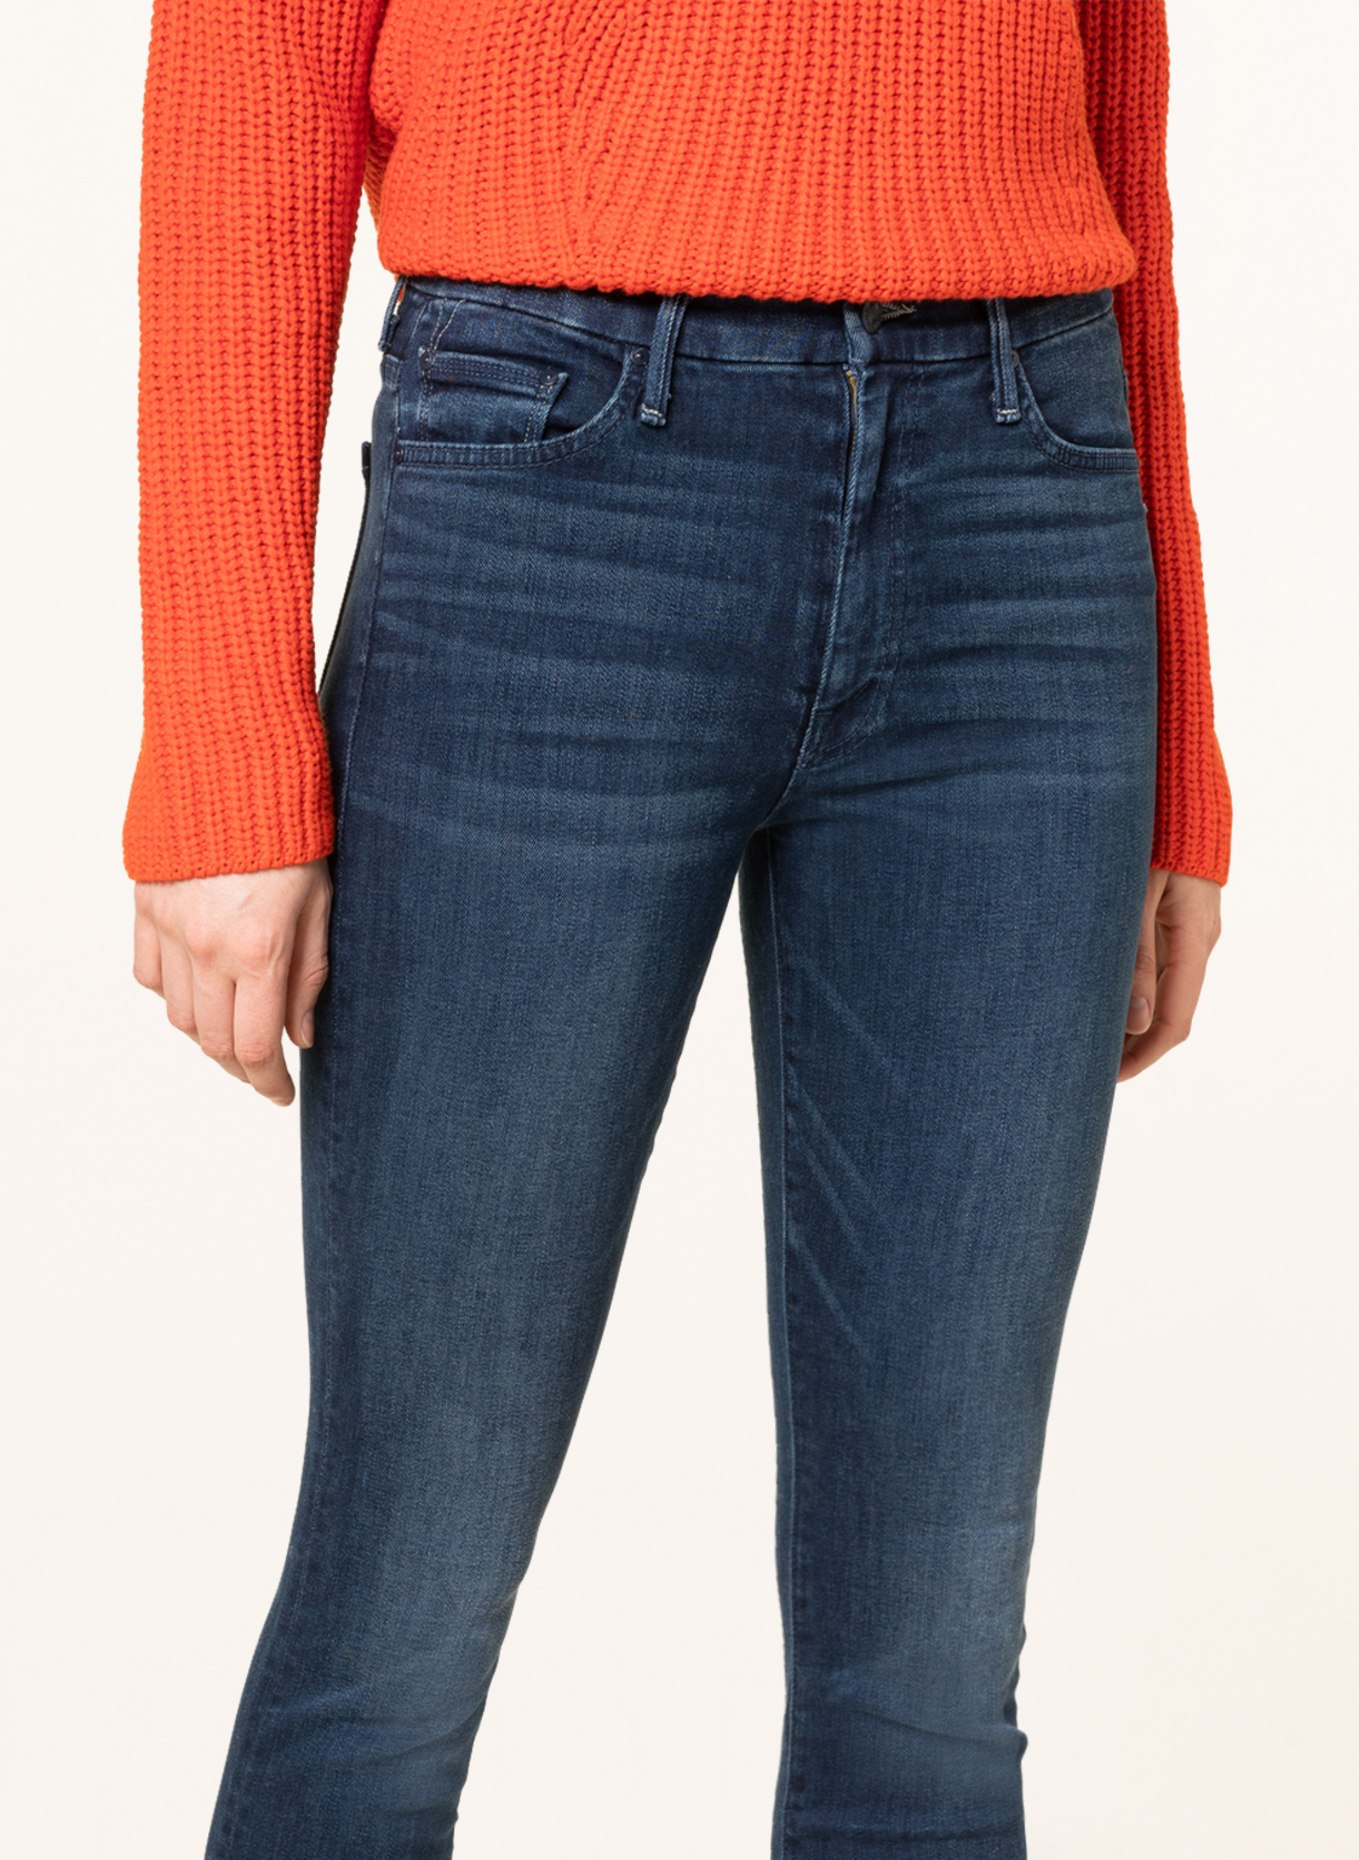 MOTHER Skinny Jeans HIGH WAISTED LOOKER, Farbe: GFY dublau (Bild 5)